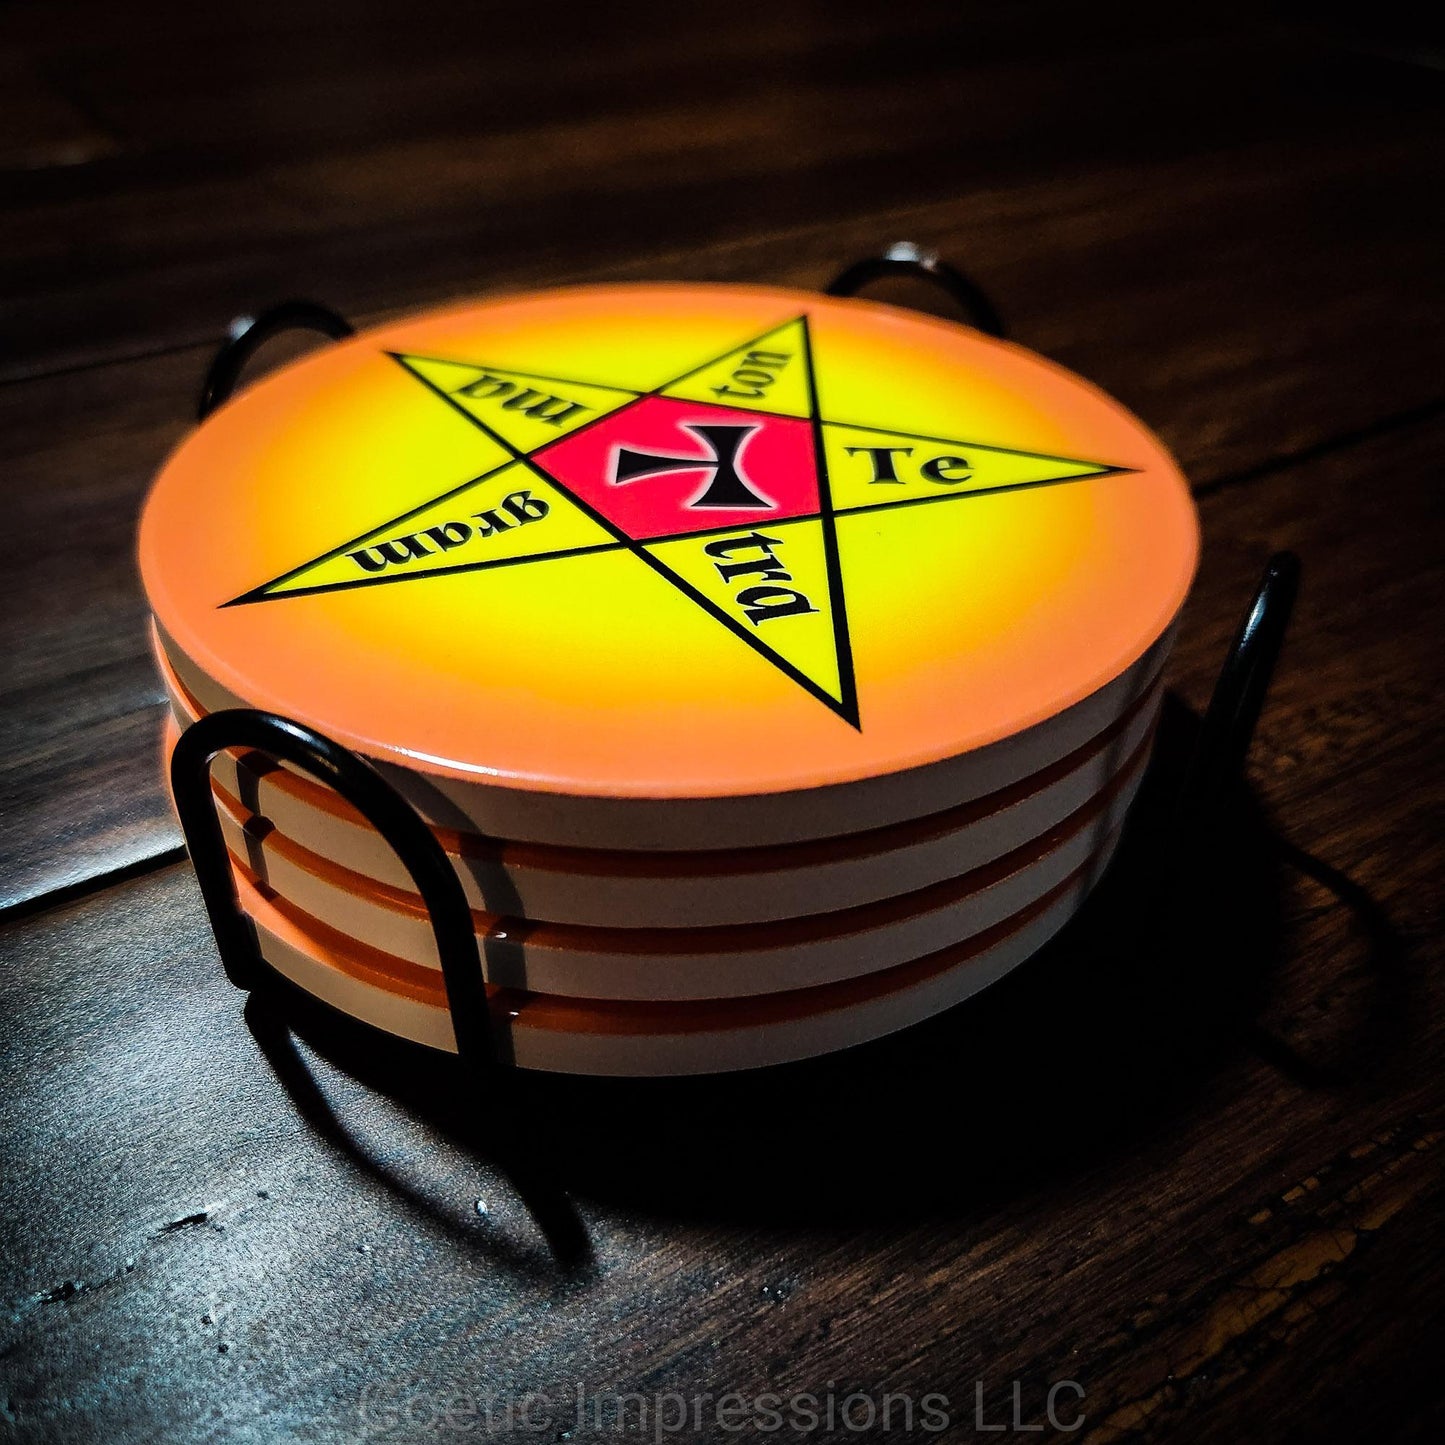 A set of Tetragrammaton ceramic candle disks.